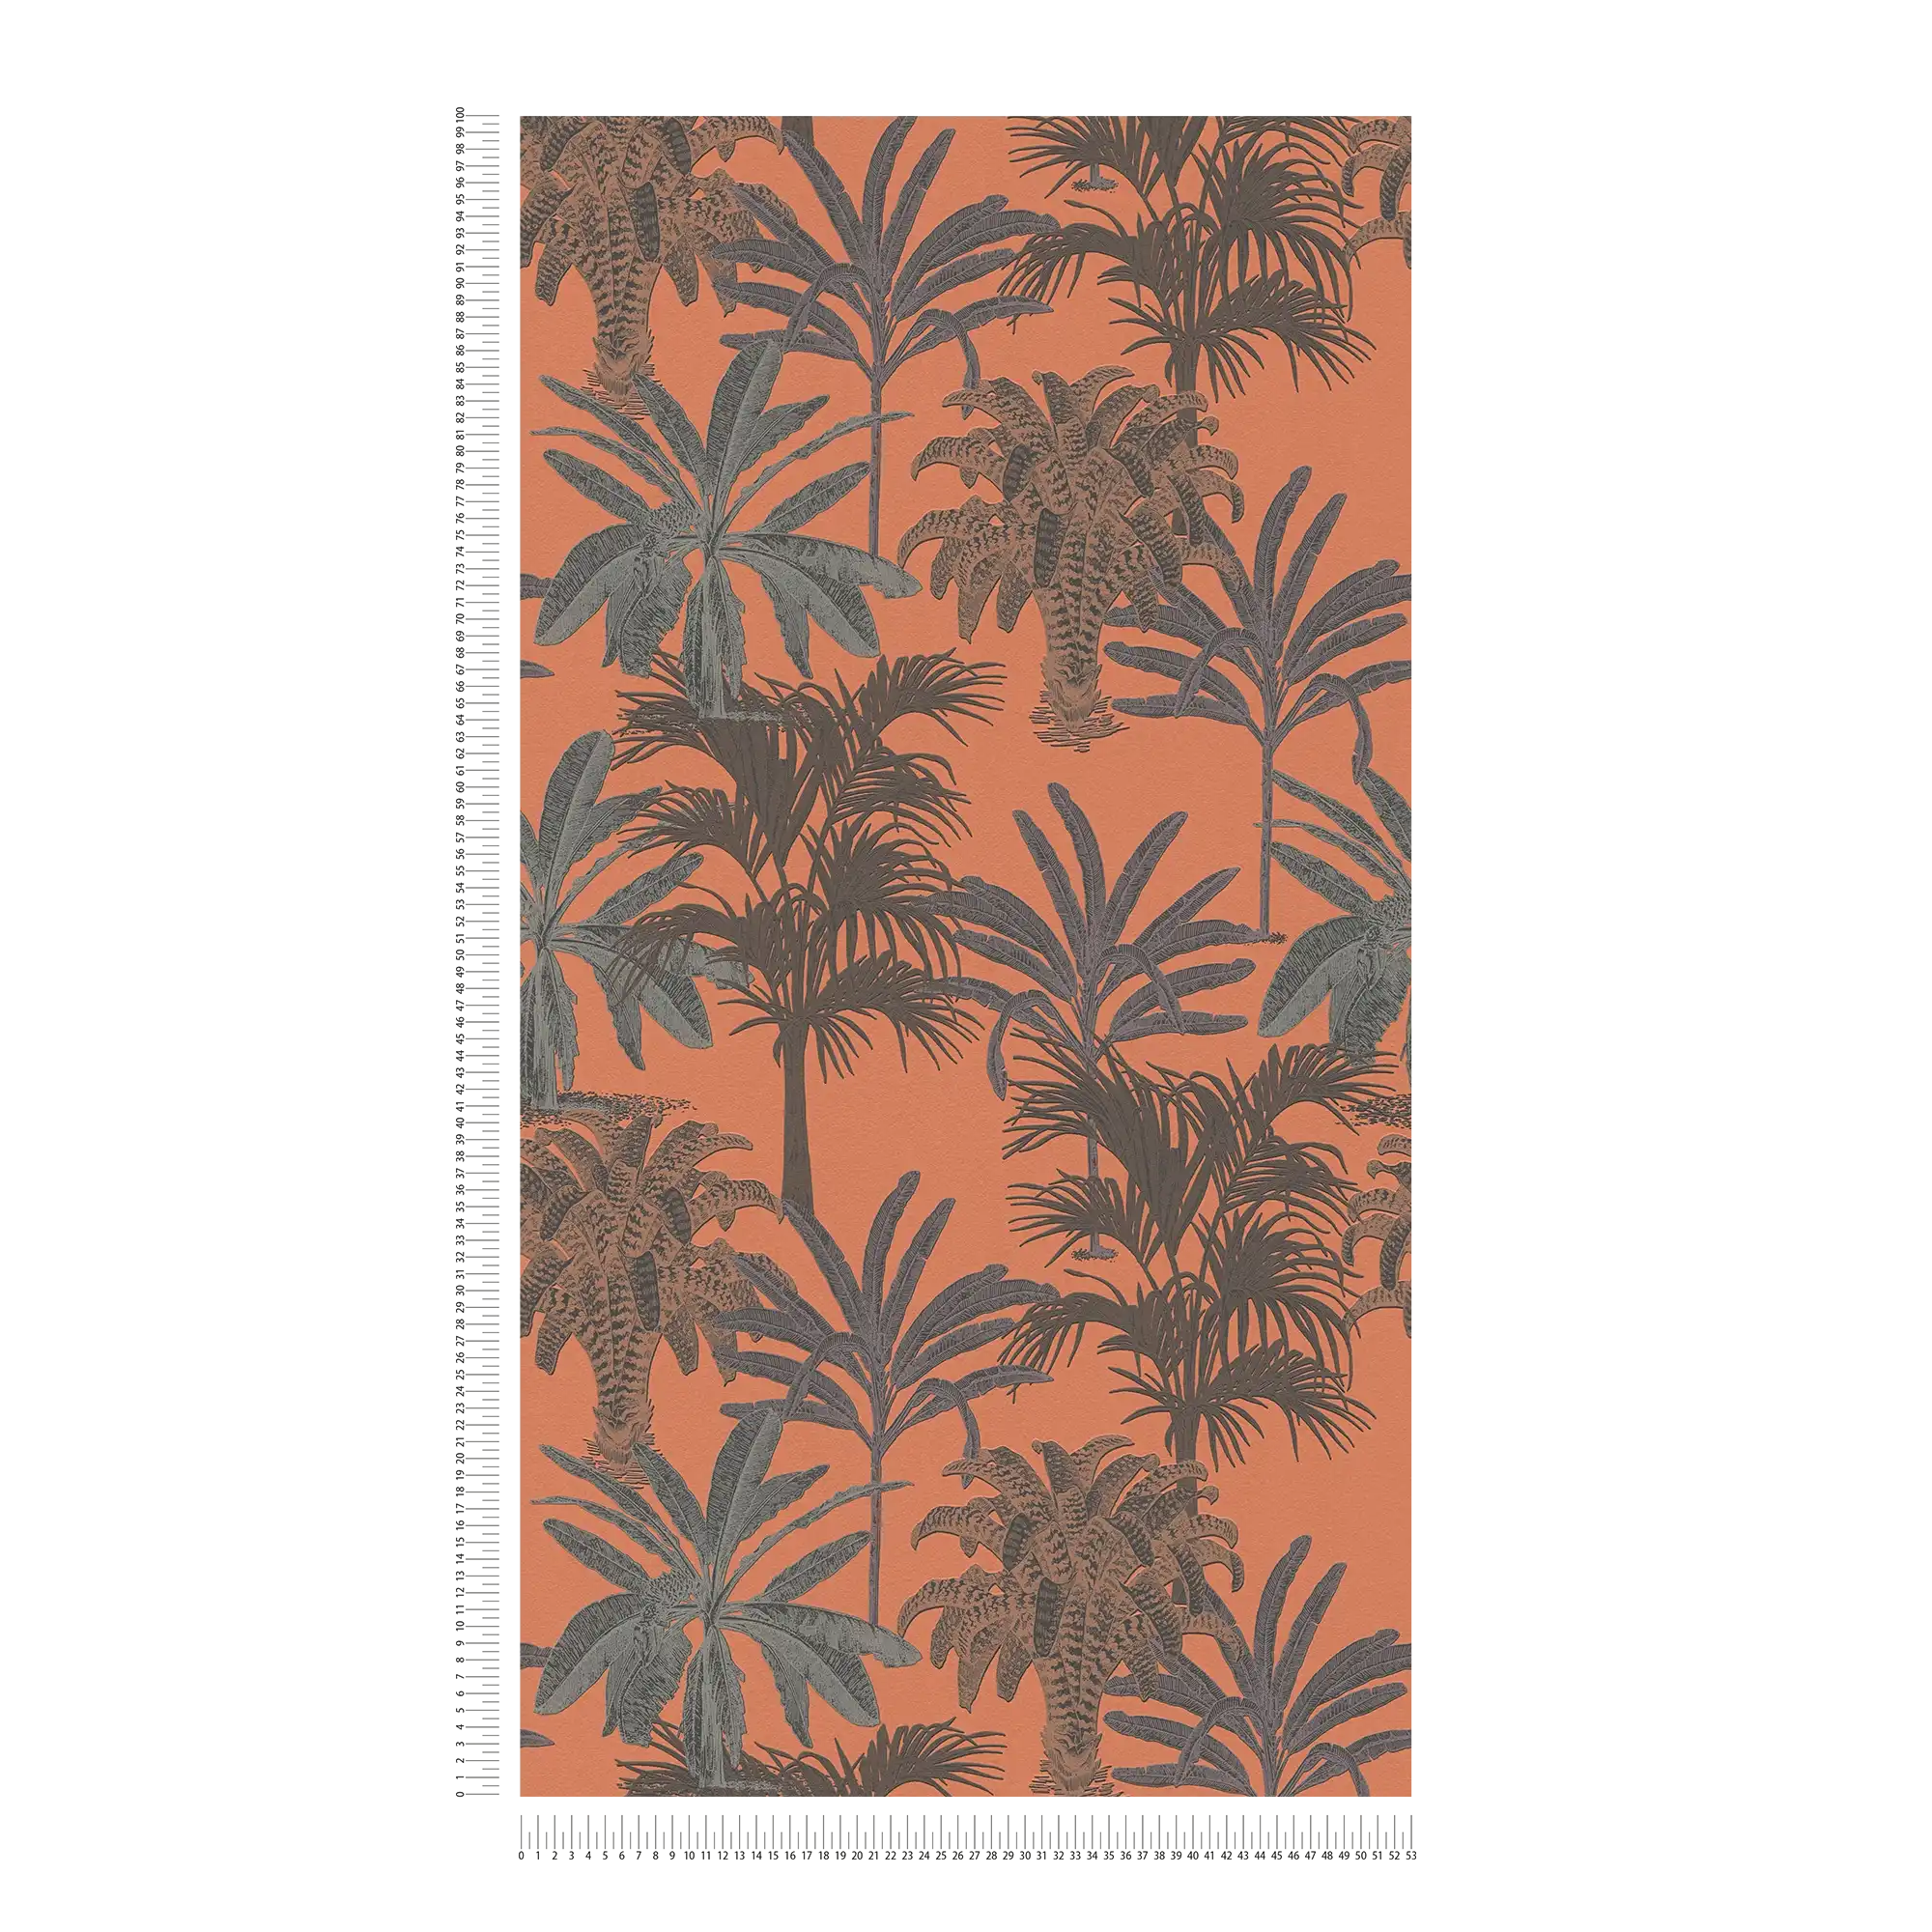             MICHALSKY vliesbehang palmboom patroon koloniale stijl - oranje, bruin
        